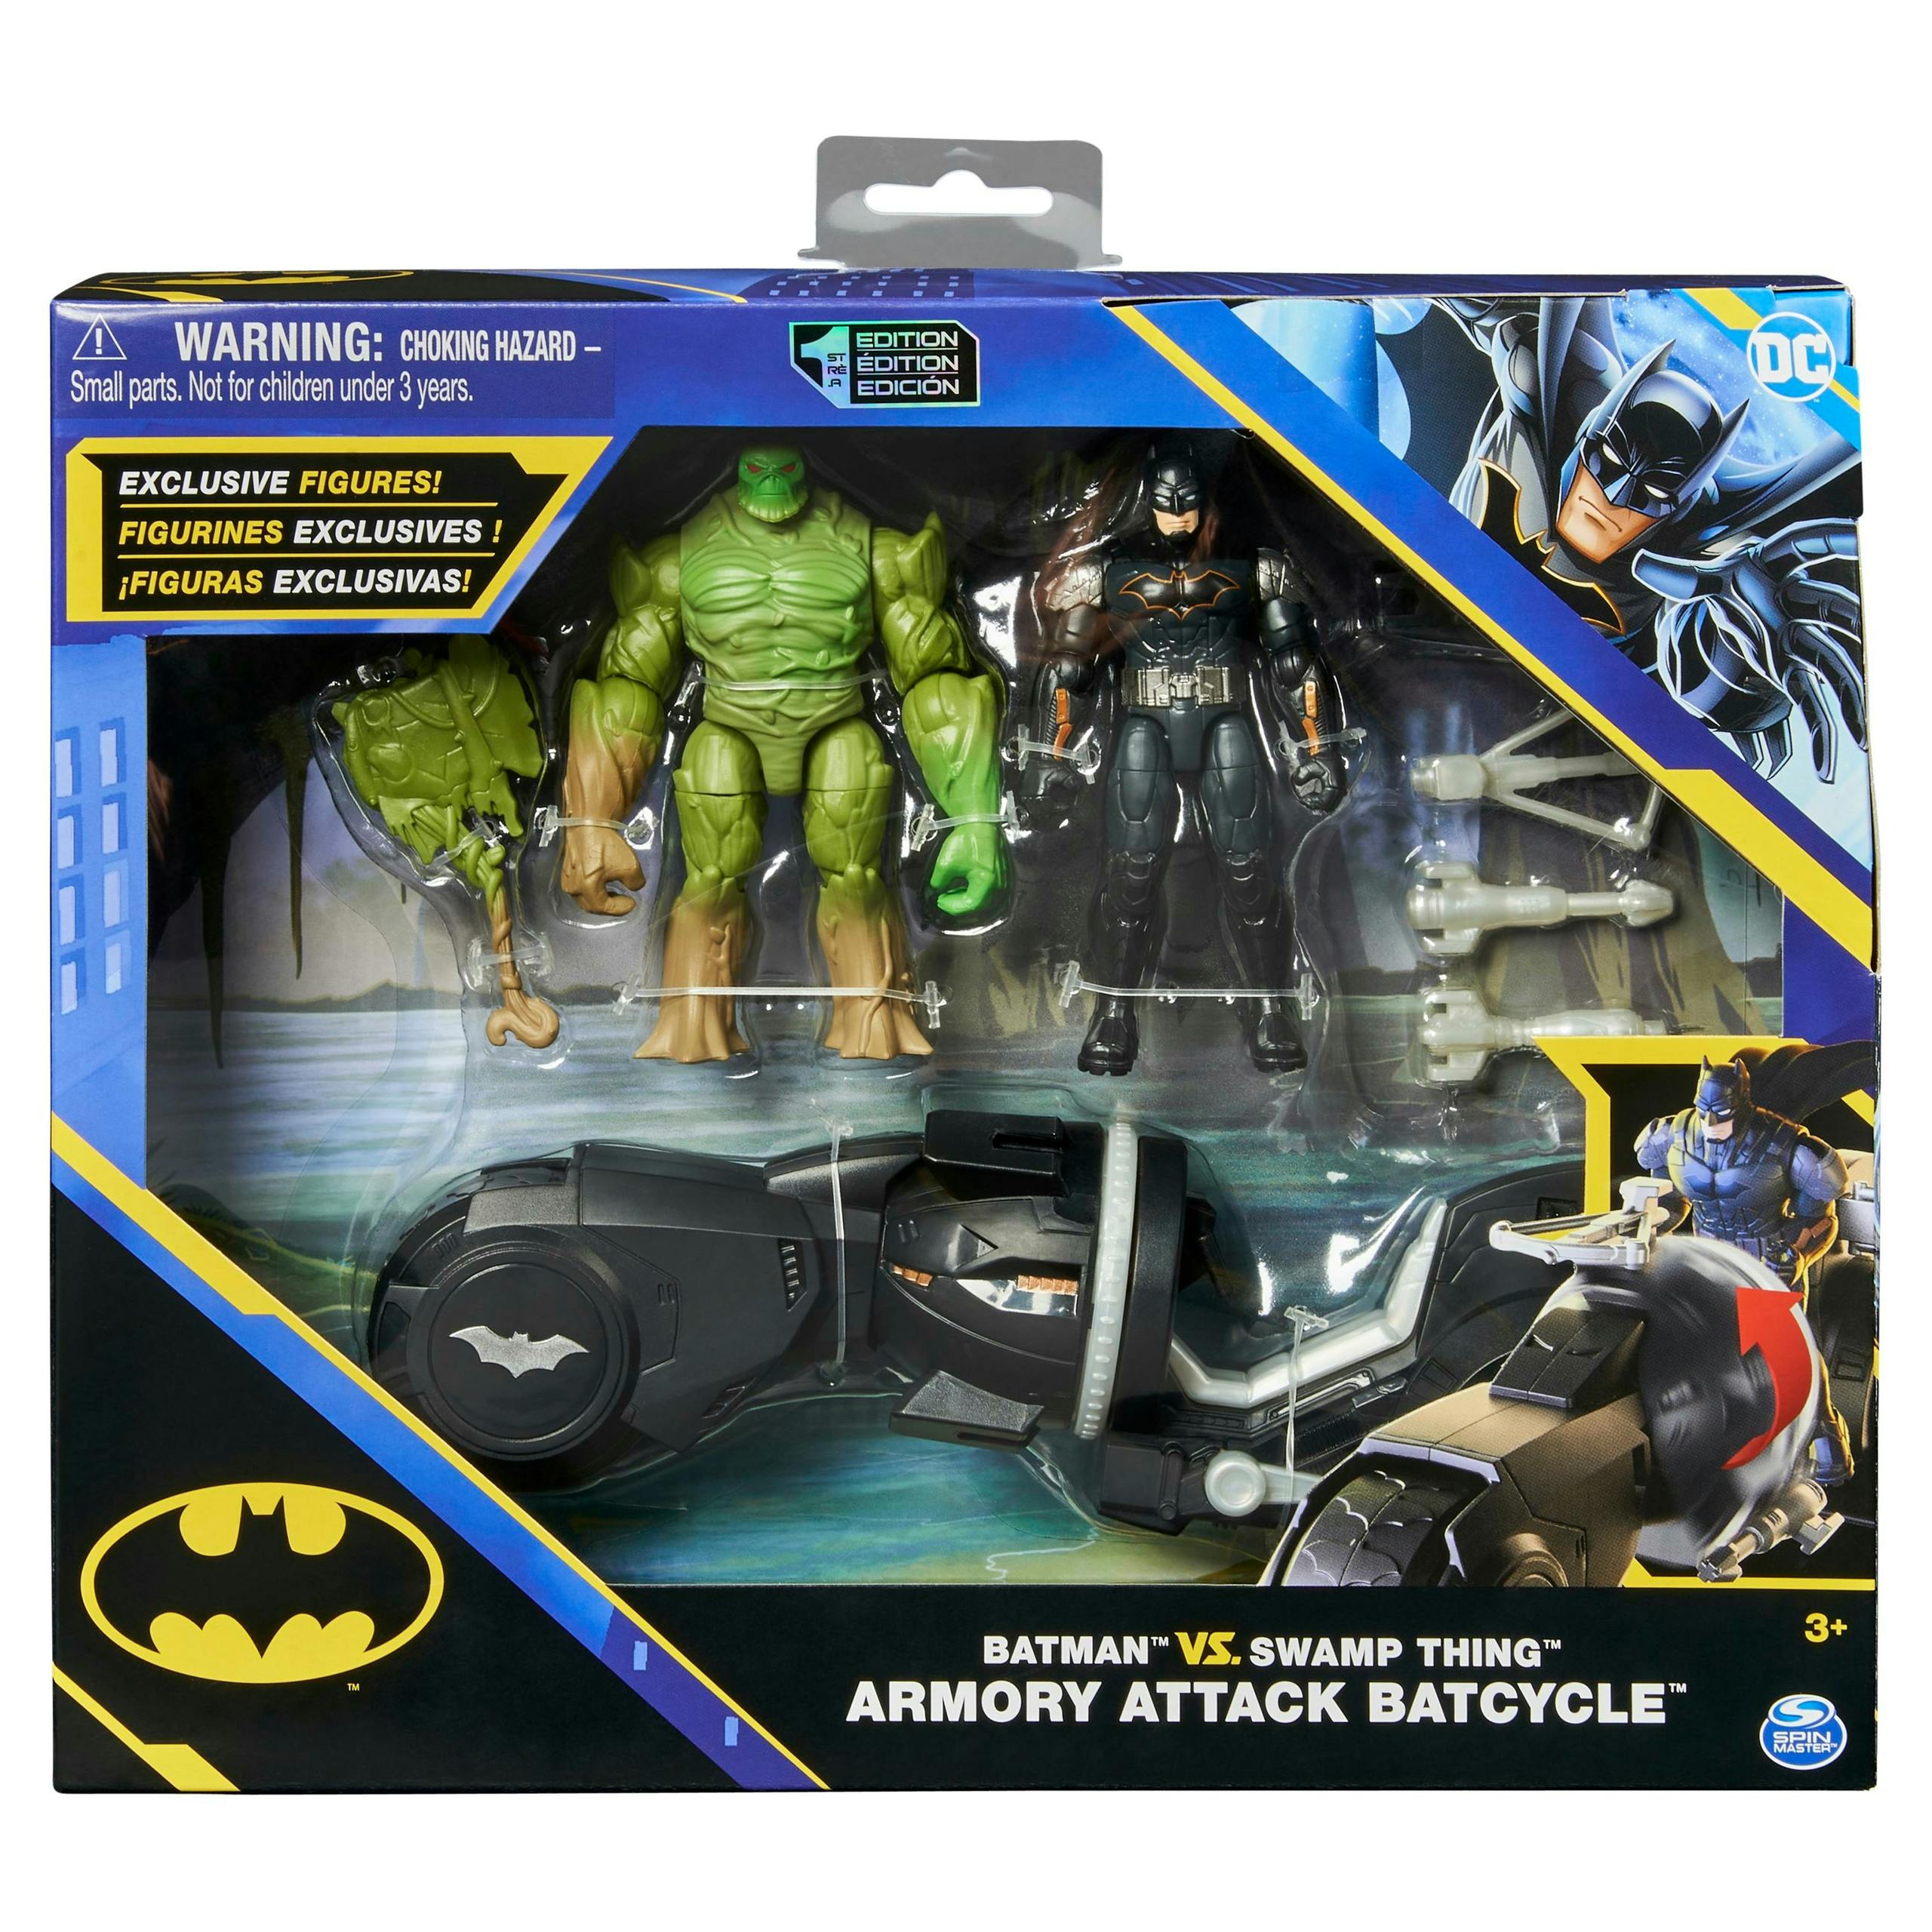 Batman Versus Swamp Thing Armory Attack Batcycle-set